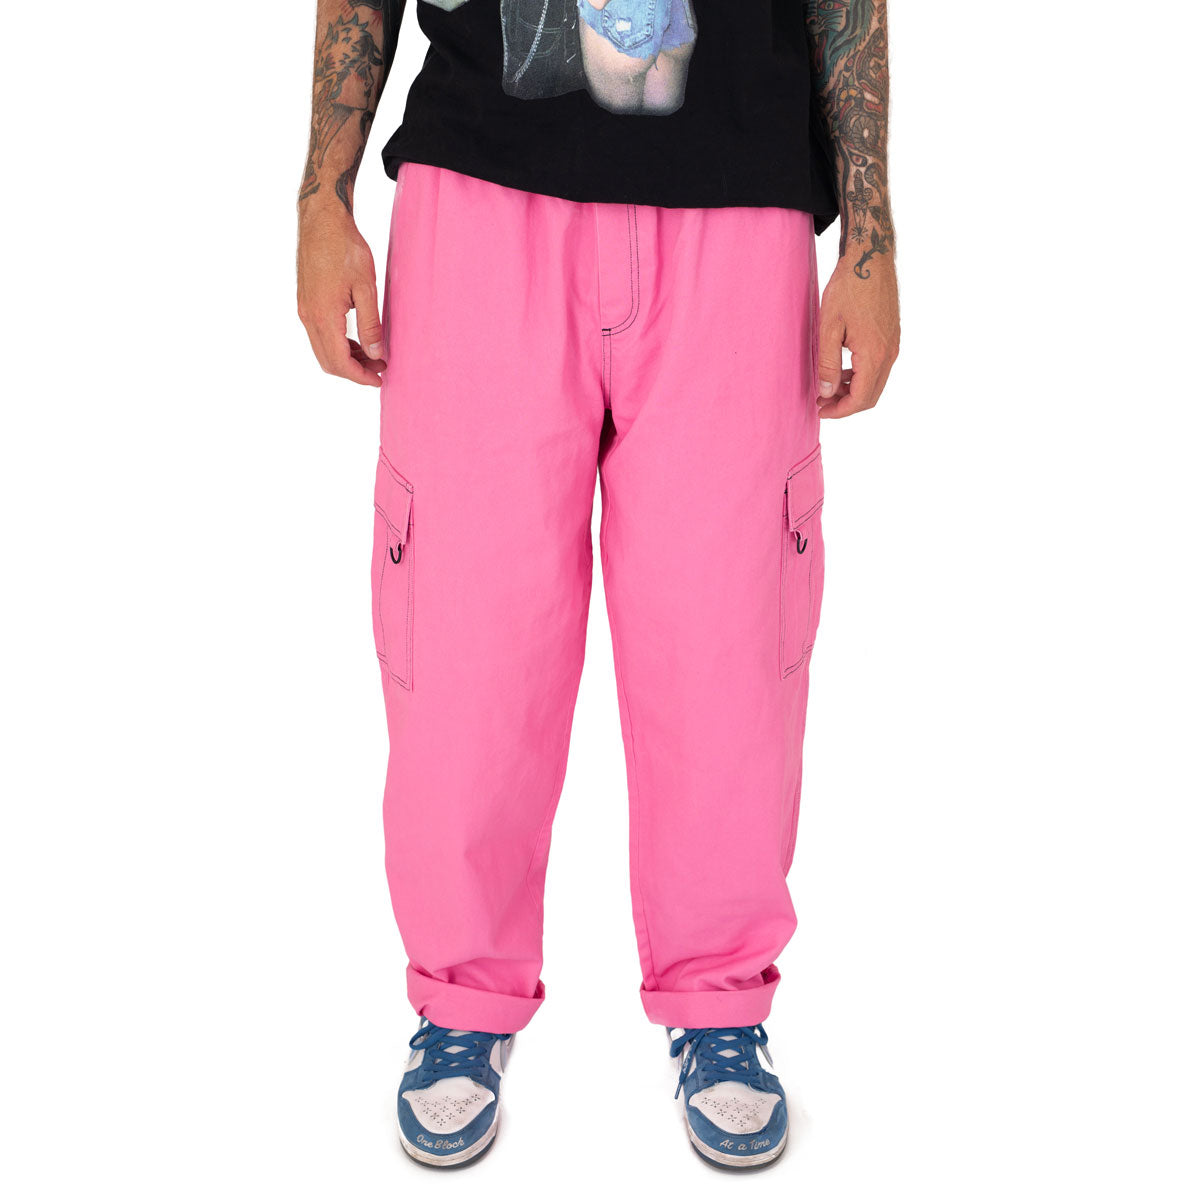 CCS Titus Twill Cargo Pants - Pink/Black image 1